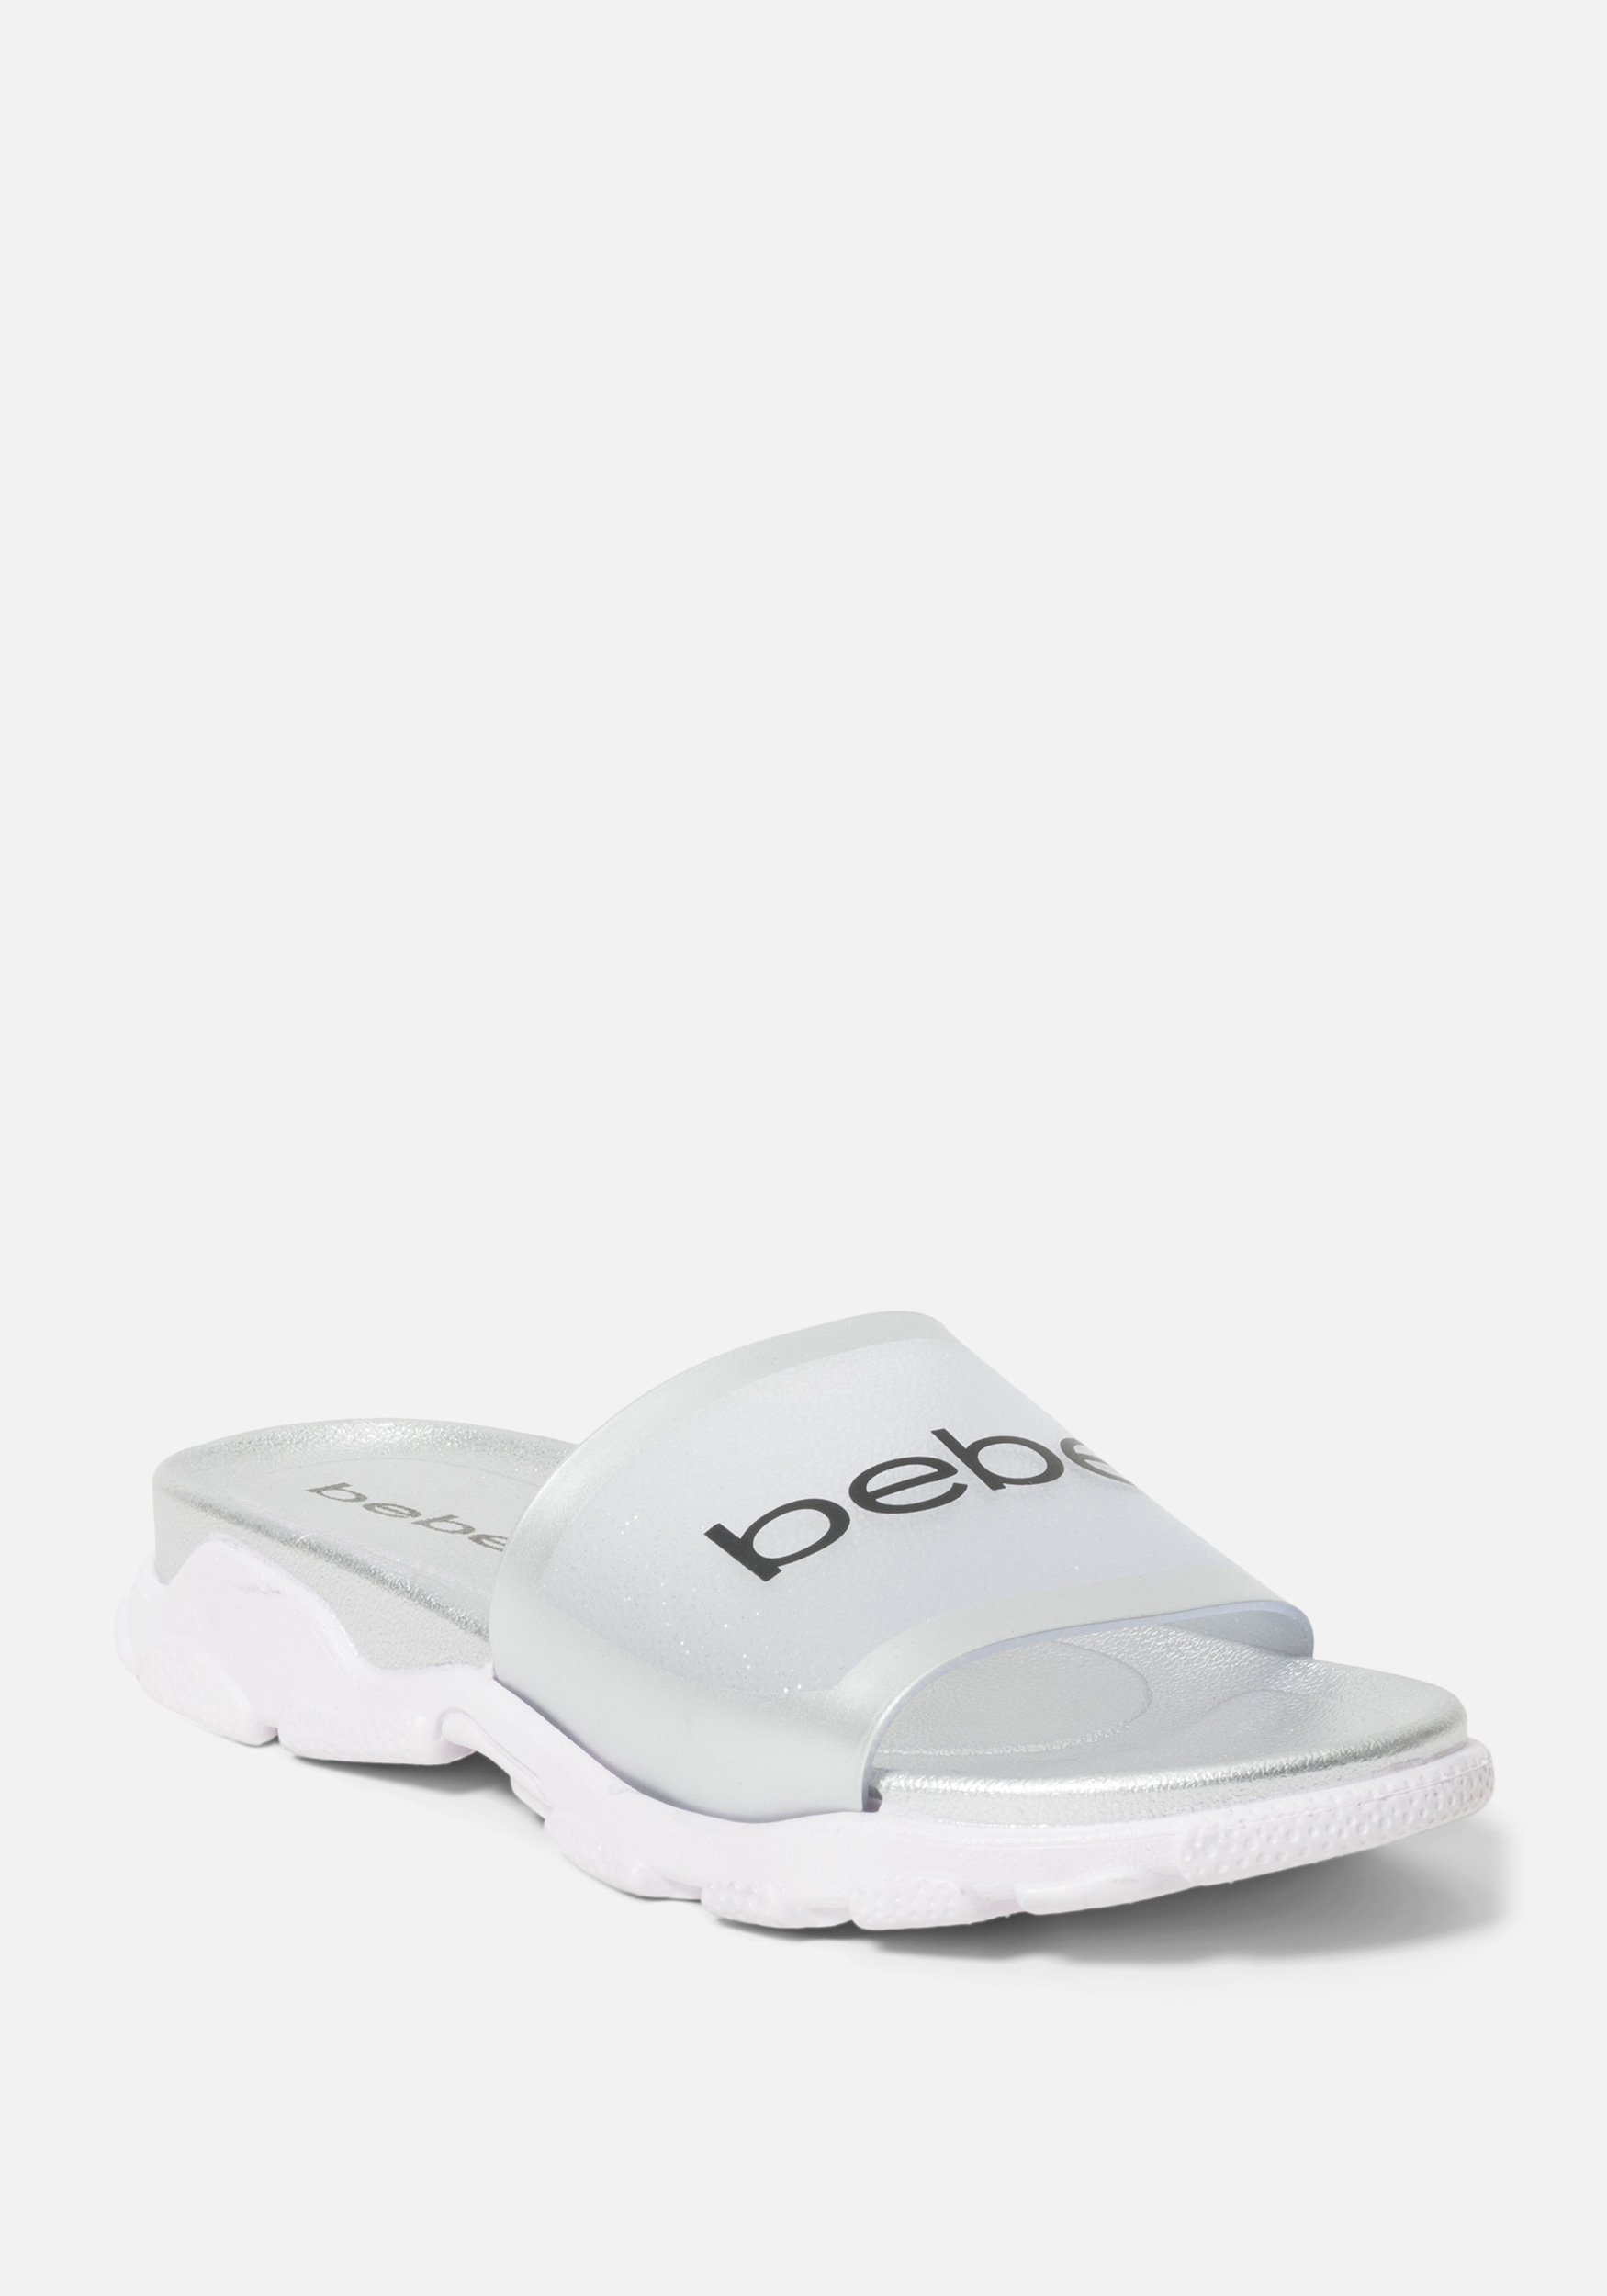 Bebe Women's Natanya Sporty Slides Shoe, Size 8 in SILVER Synthetic